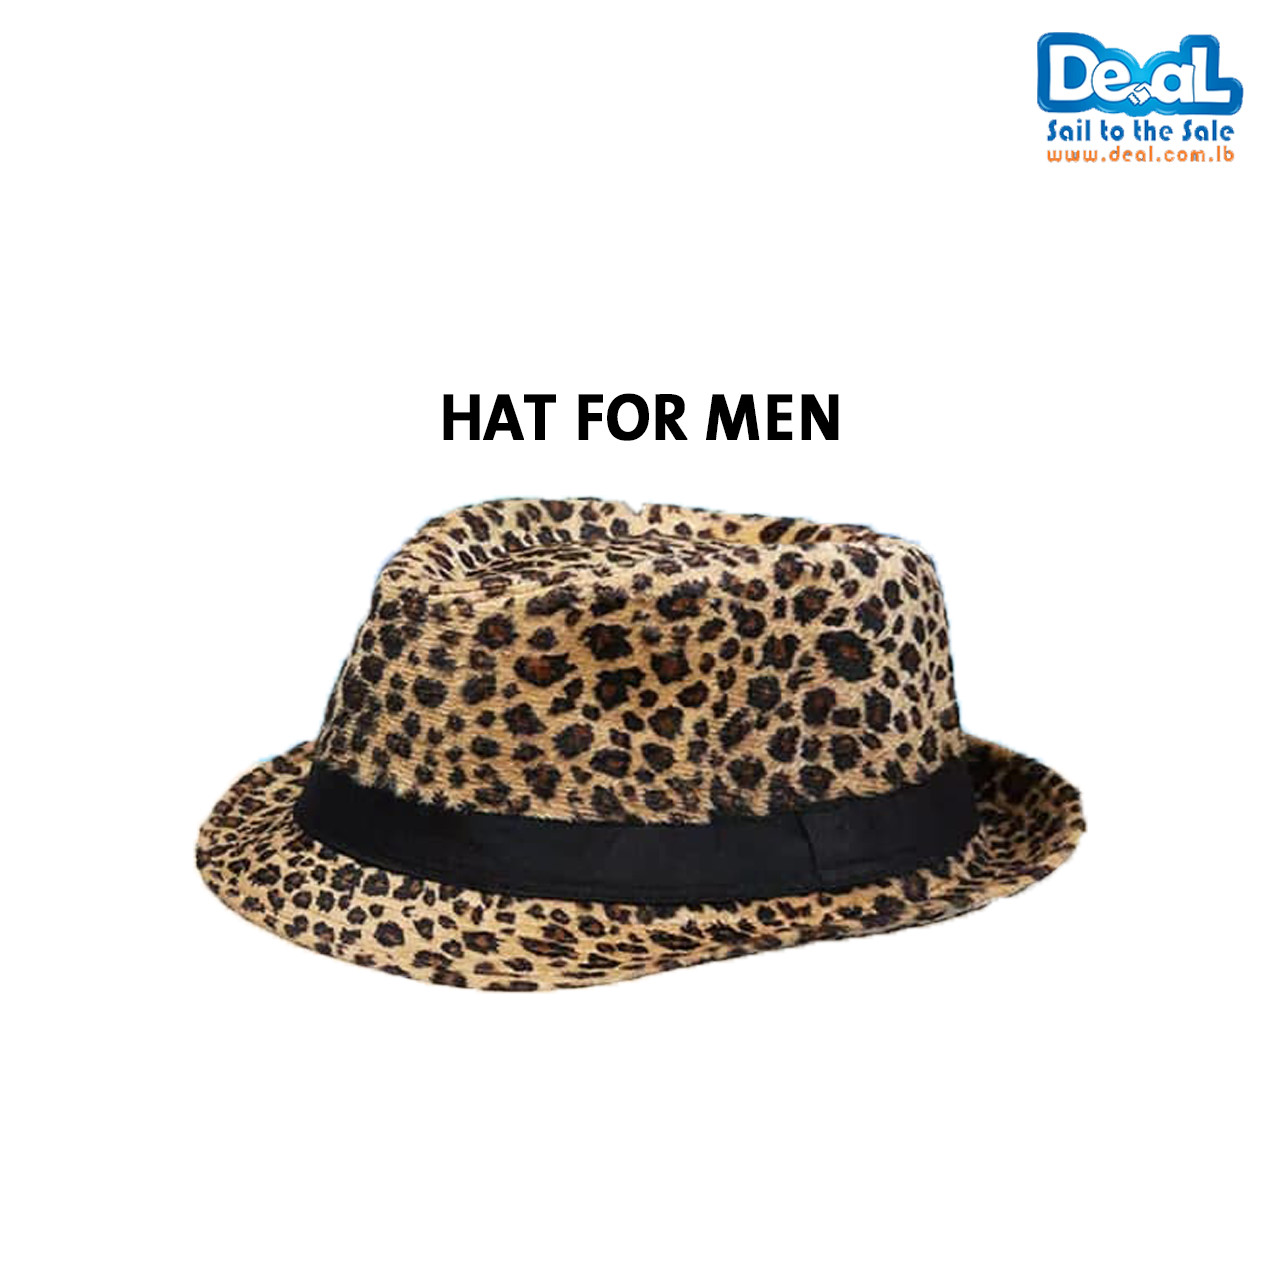 Stylish Leopard Print Fedora Hat